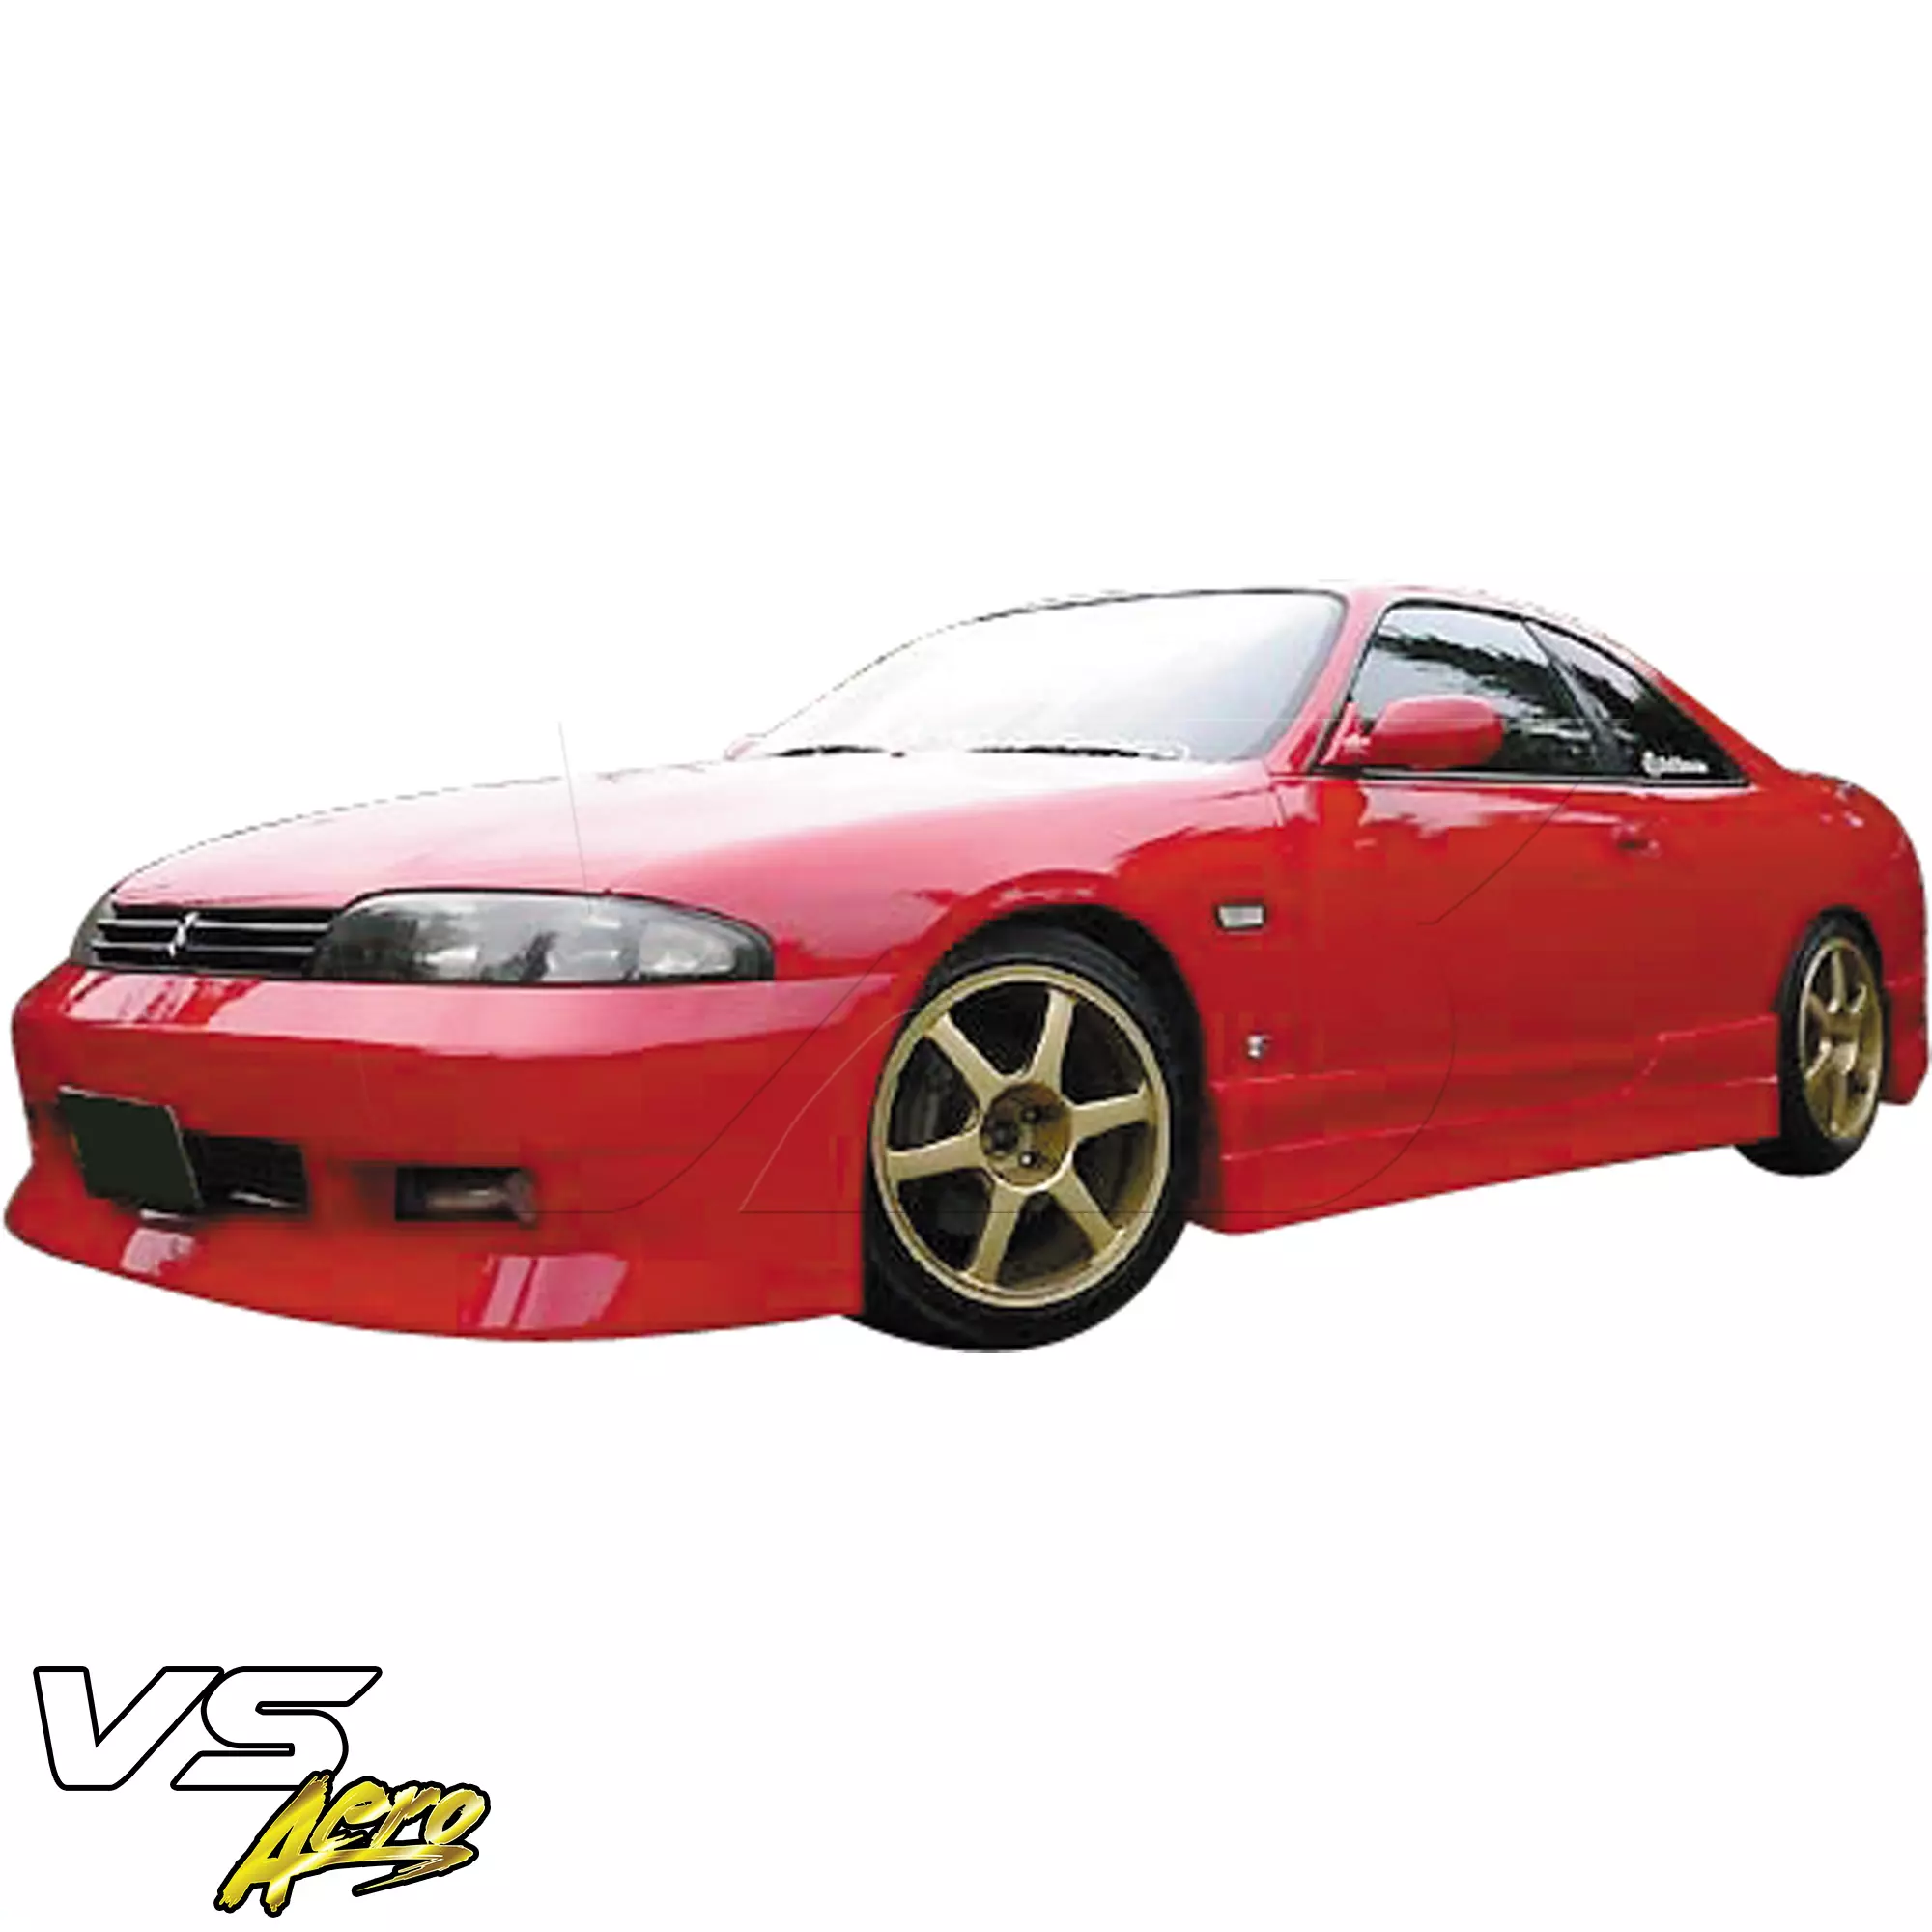 VSaero FRP FKON Front Bumper > Nissan Skyline R33 GTS 1995-1998 > 2/4dr - Image 2